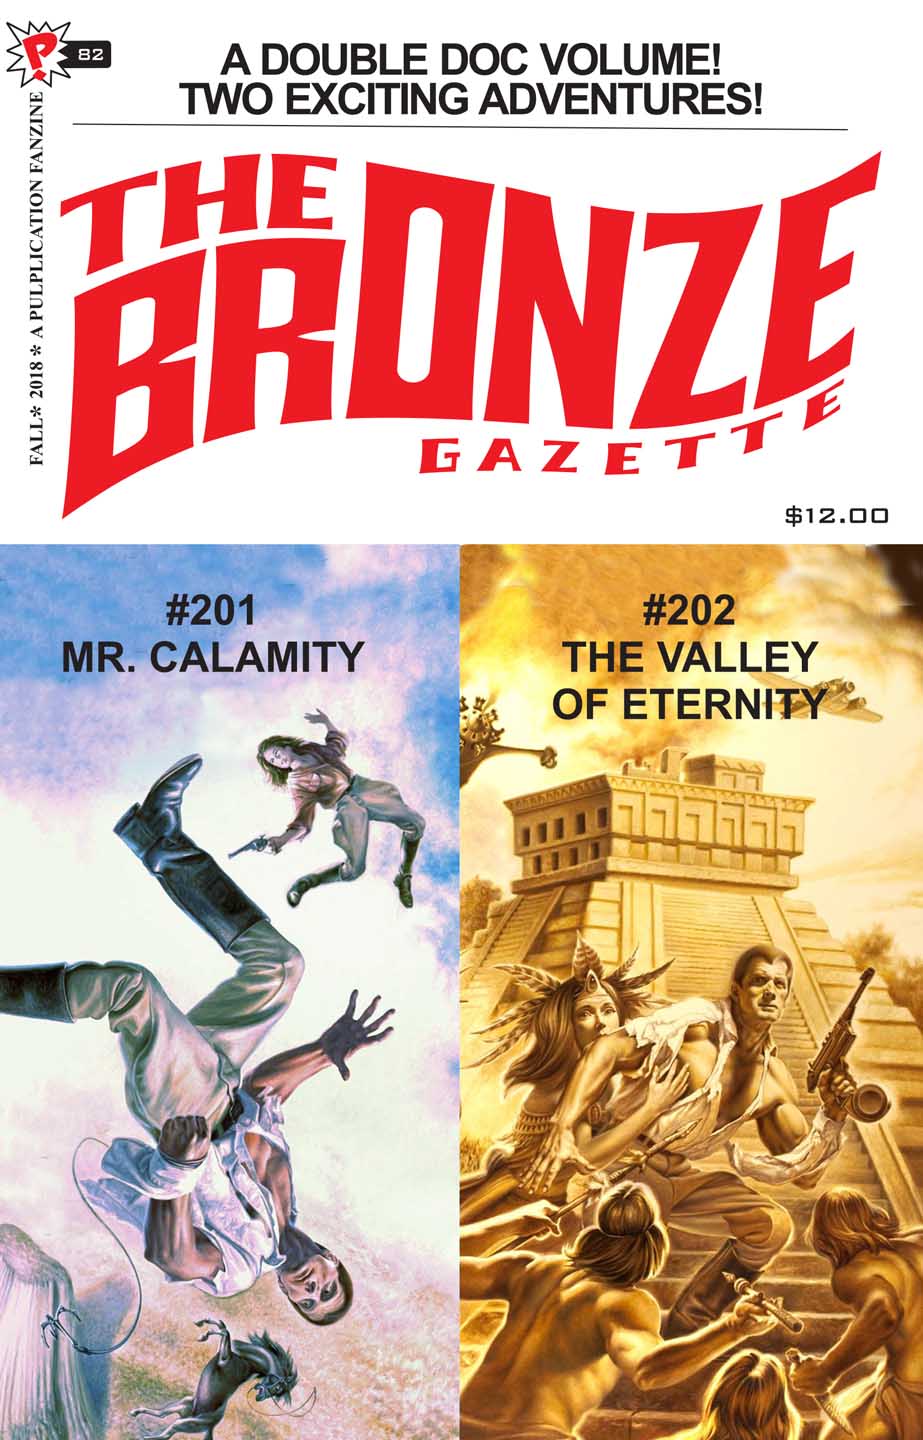 'The Bronze Gazette' #82